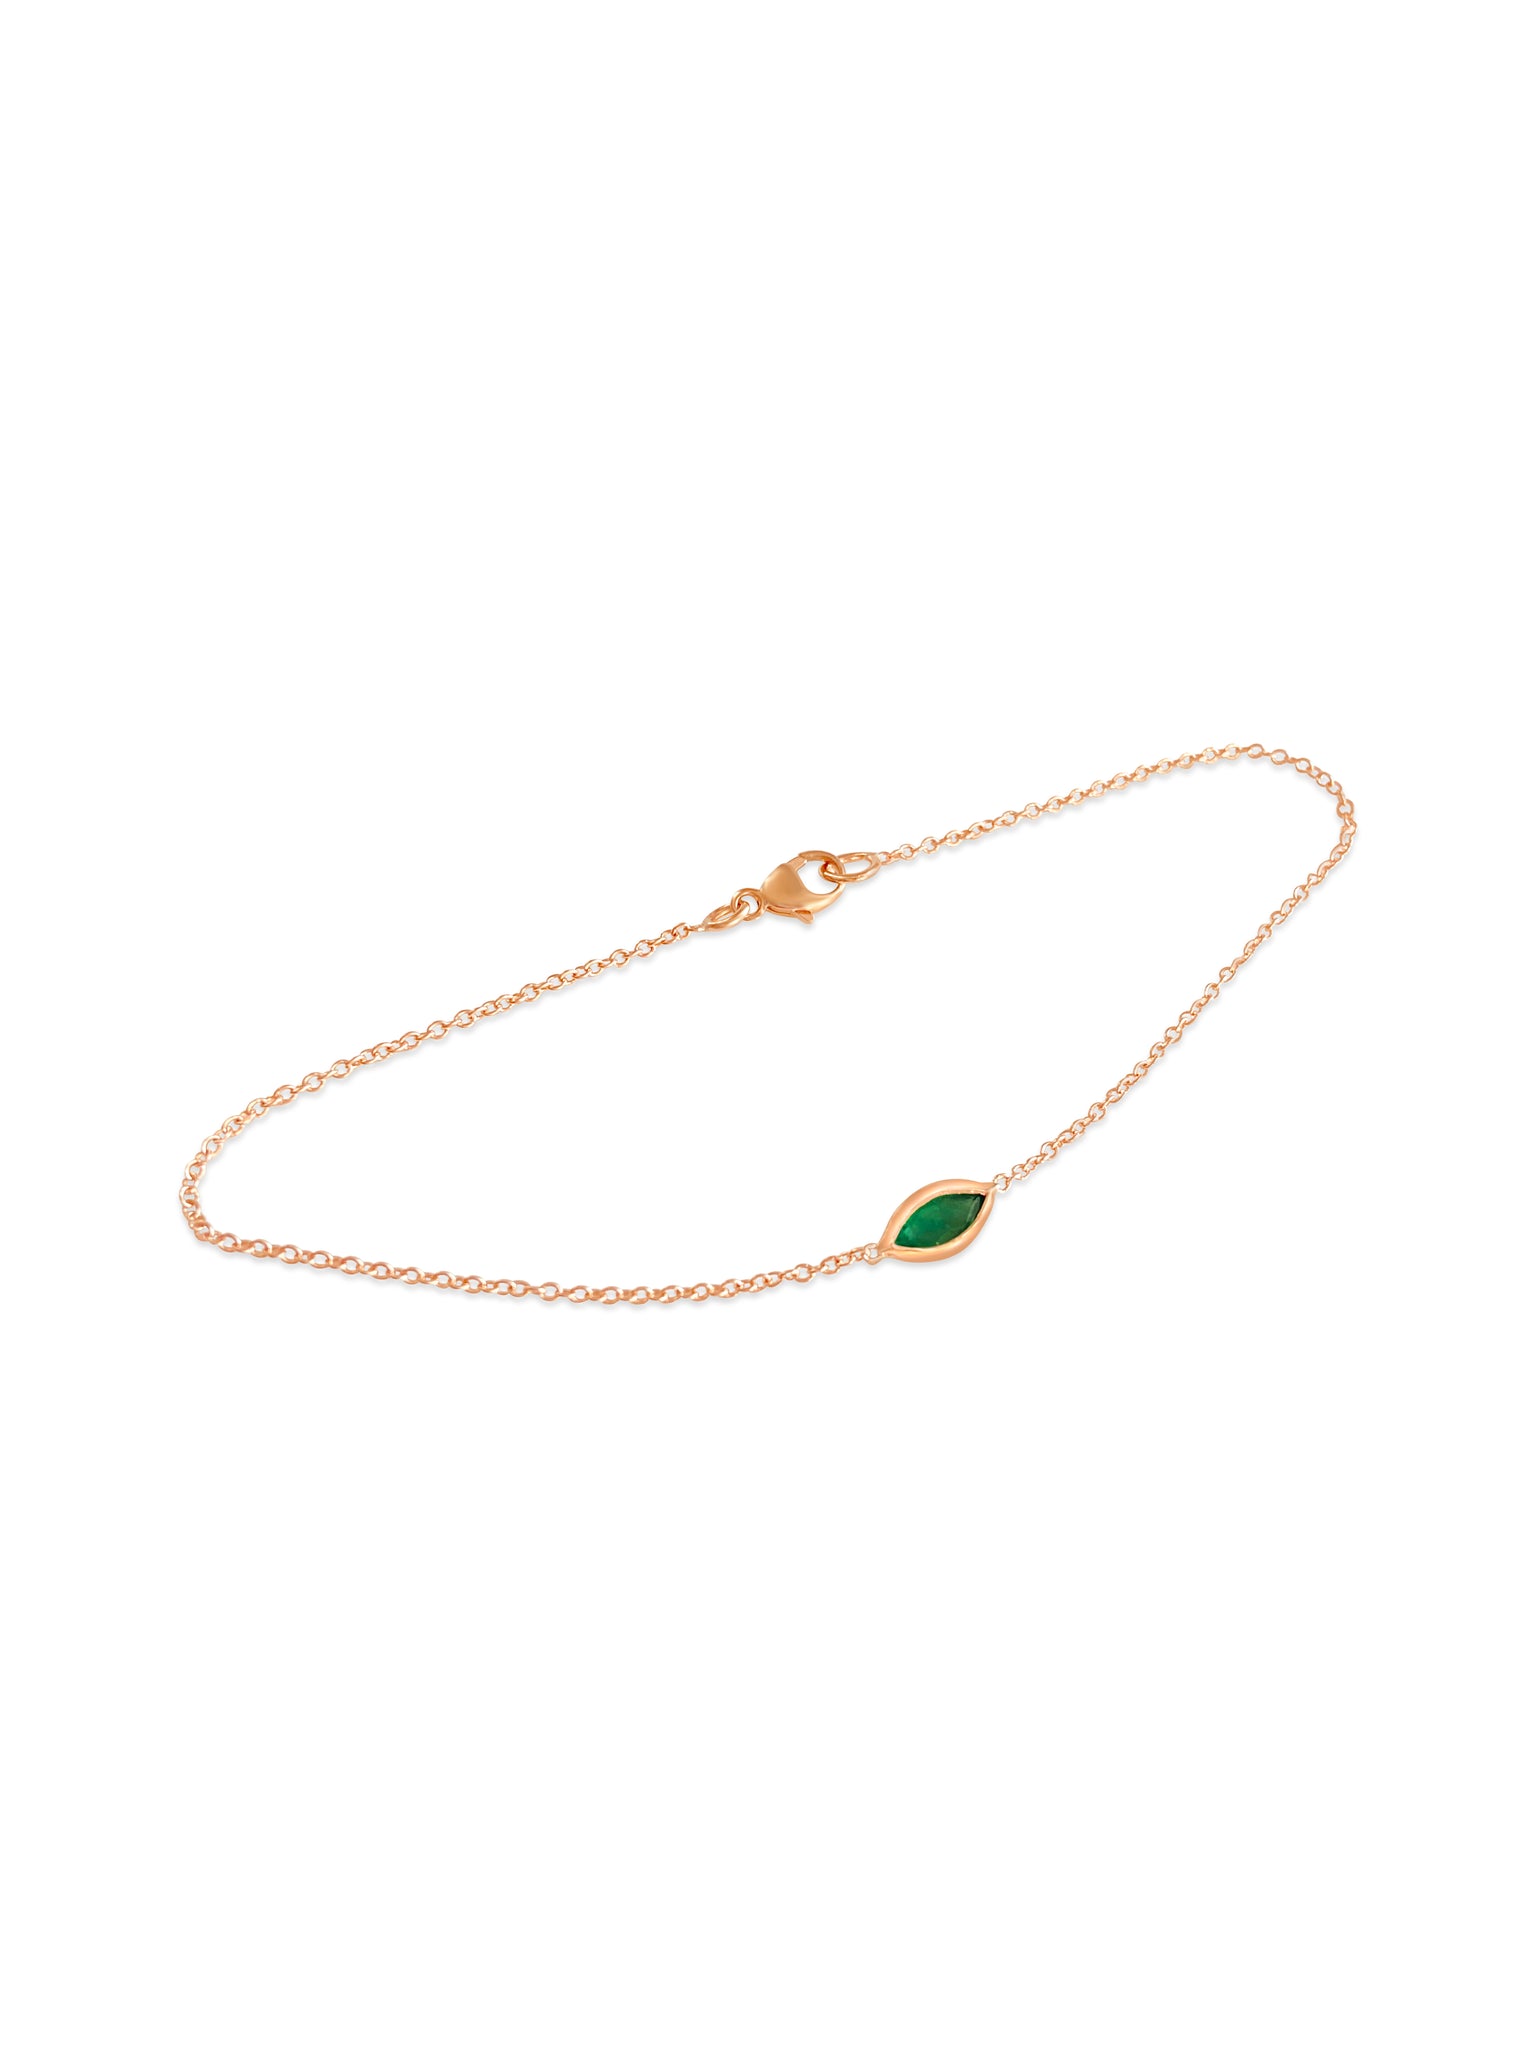 Iris Emerald Bracelet